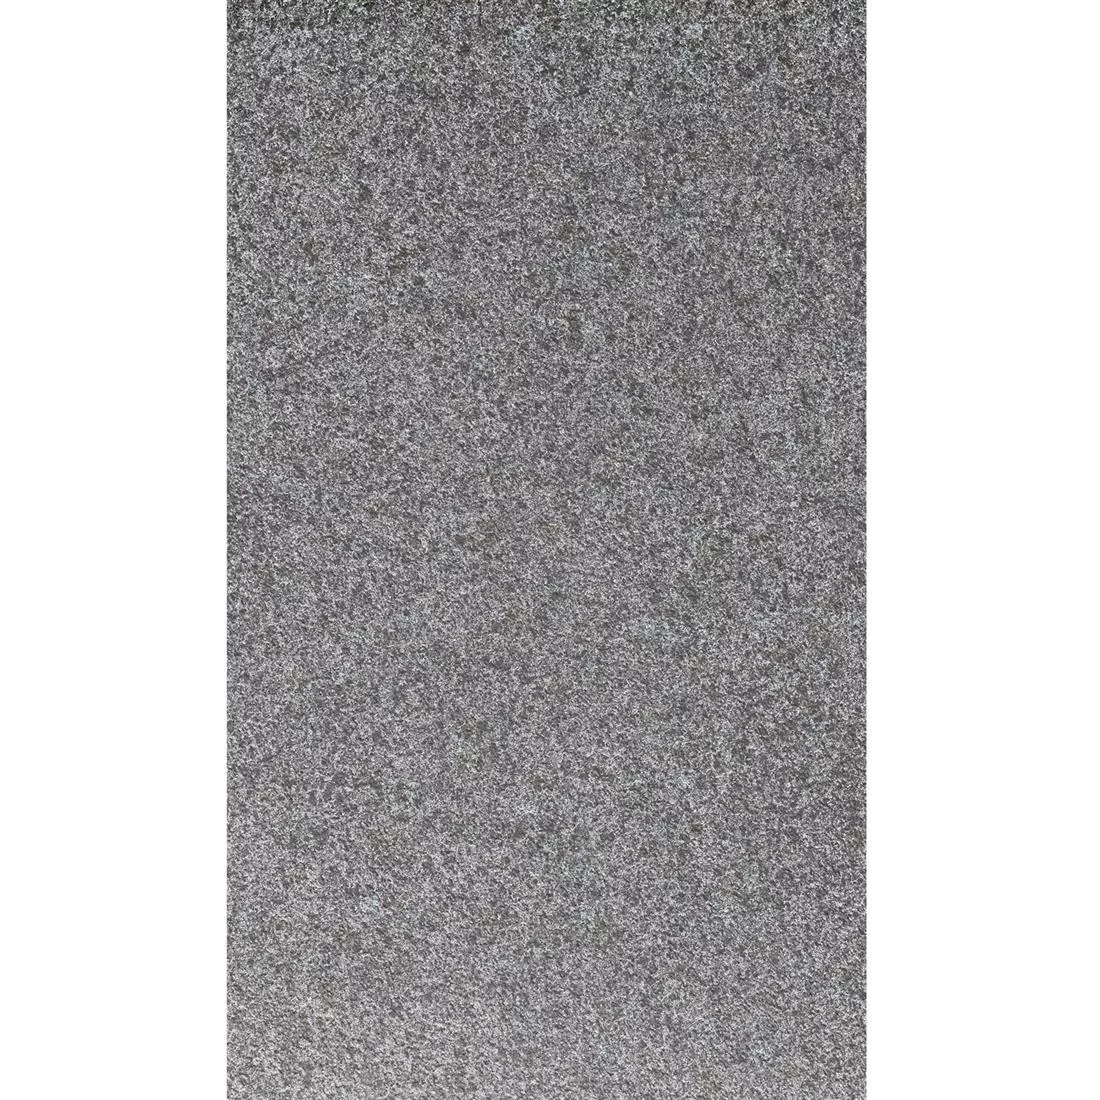 Tерасовидни Плочи Stoneway Bид Hа Eстествен Kамък Черно 60x90cm